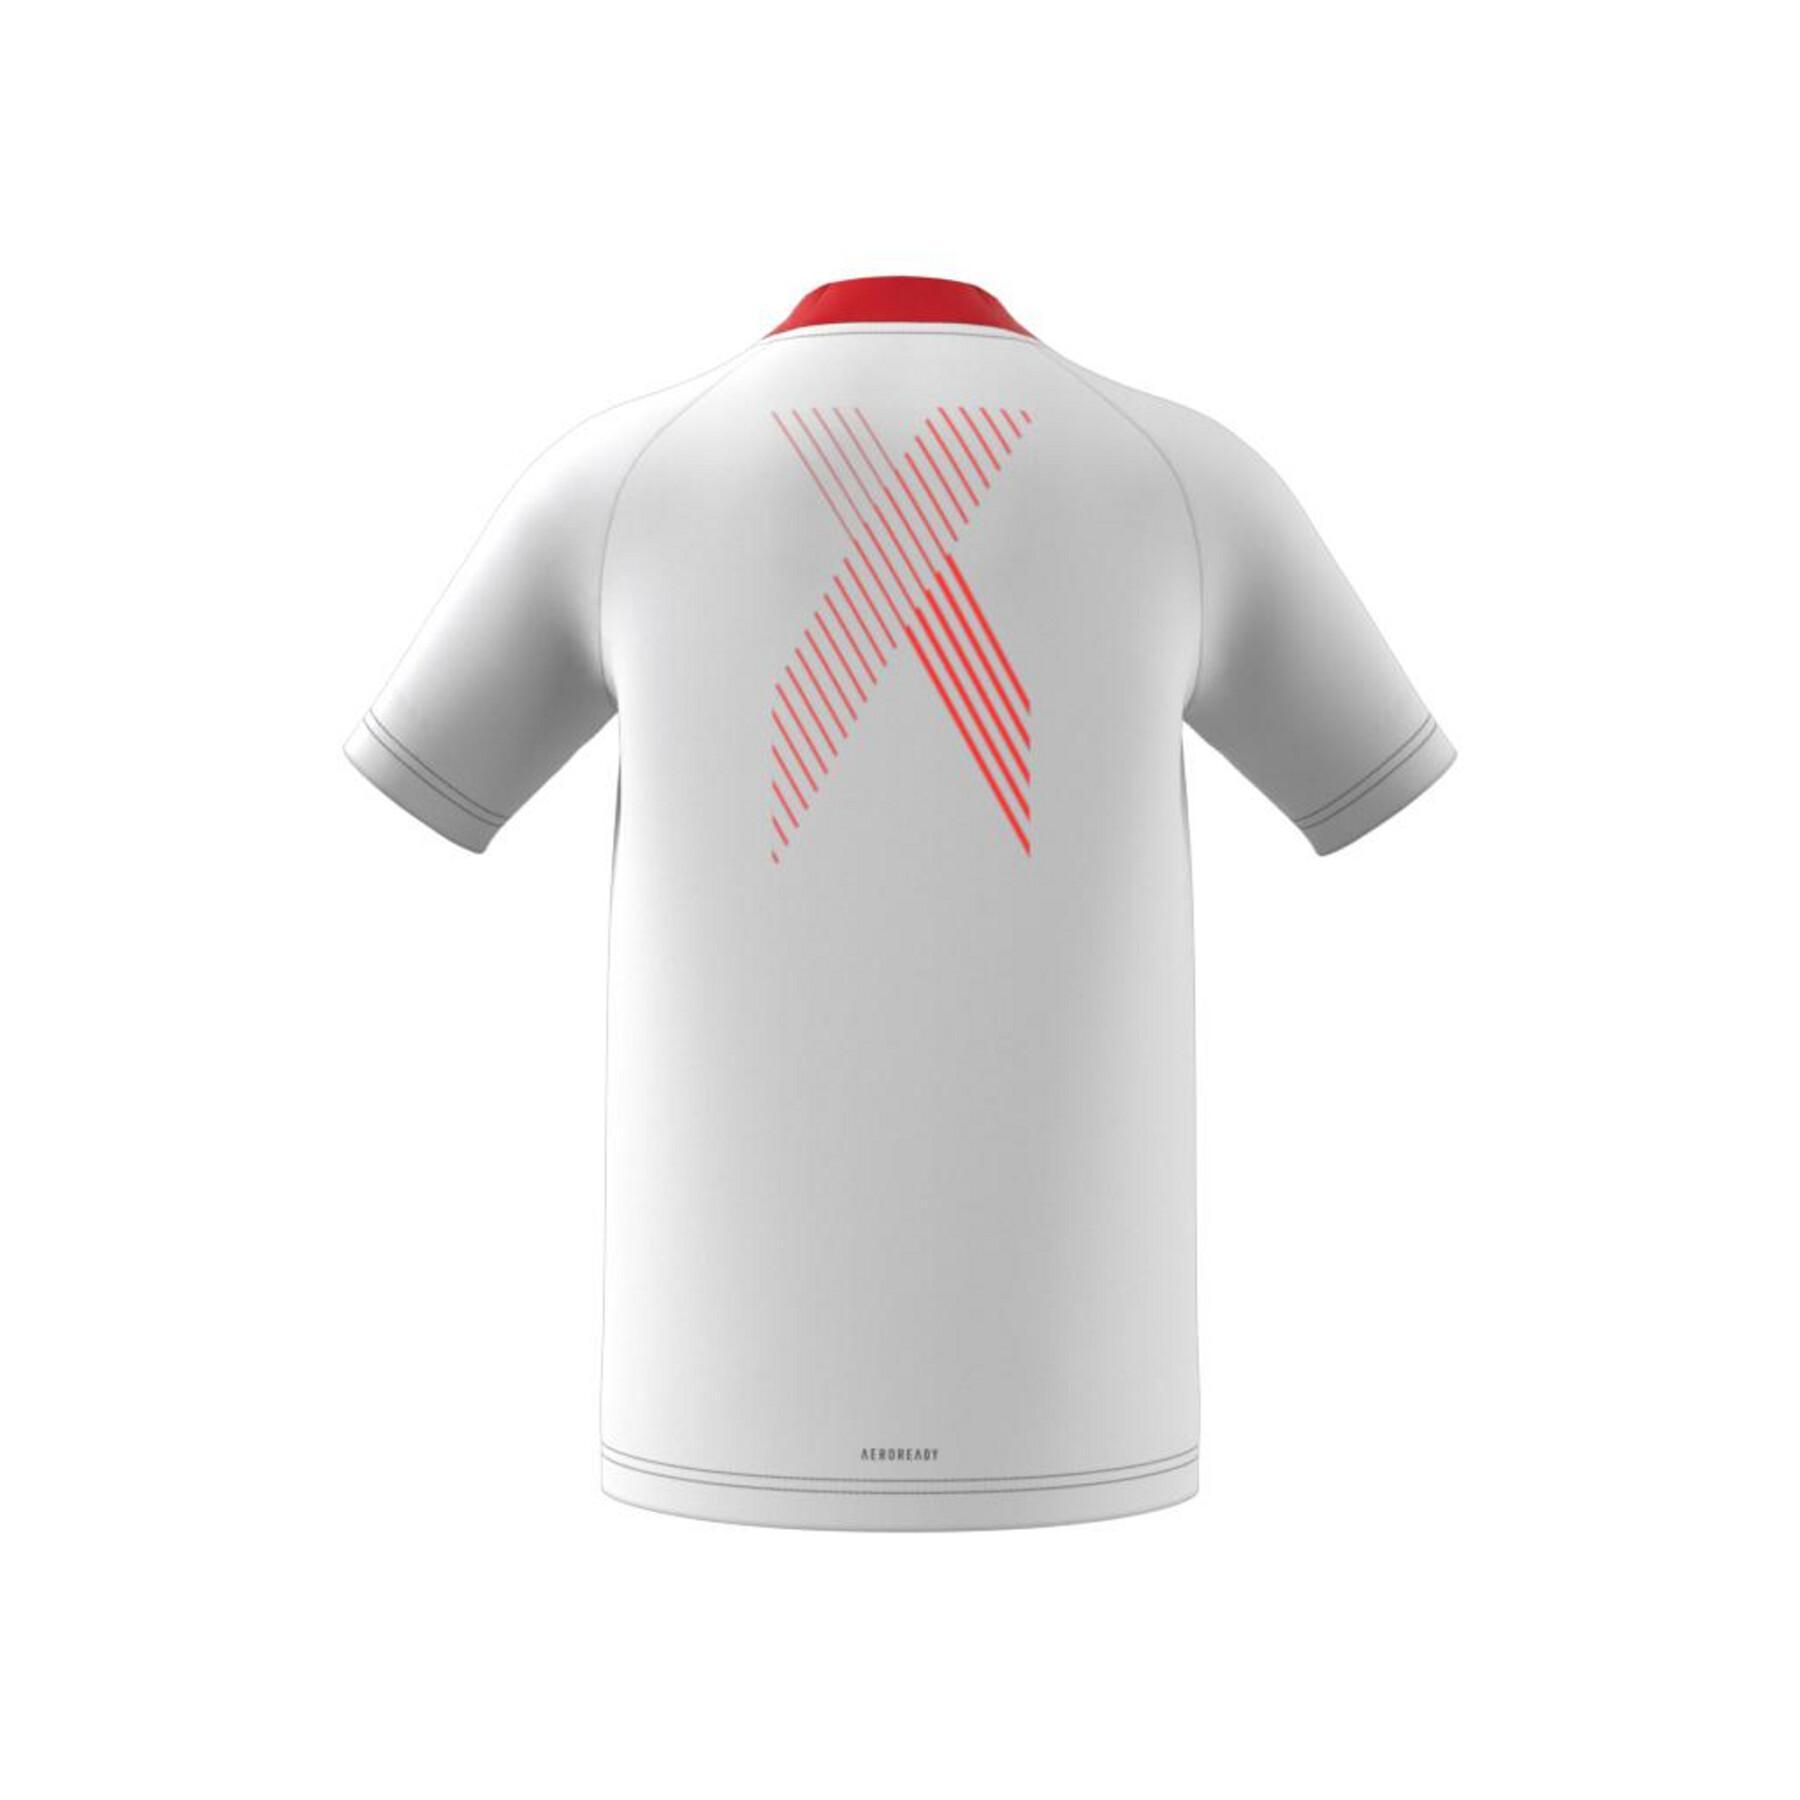 Koszulka dziecięca adidas AEROREADY x Football-Inspired